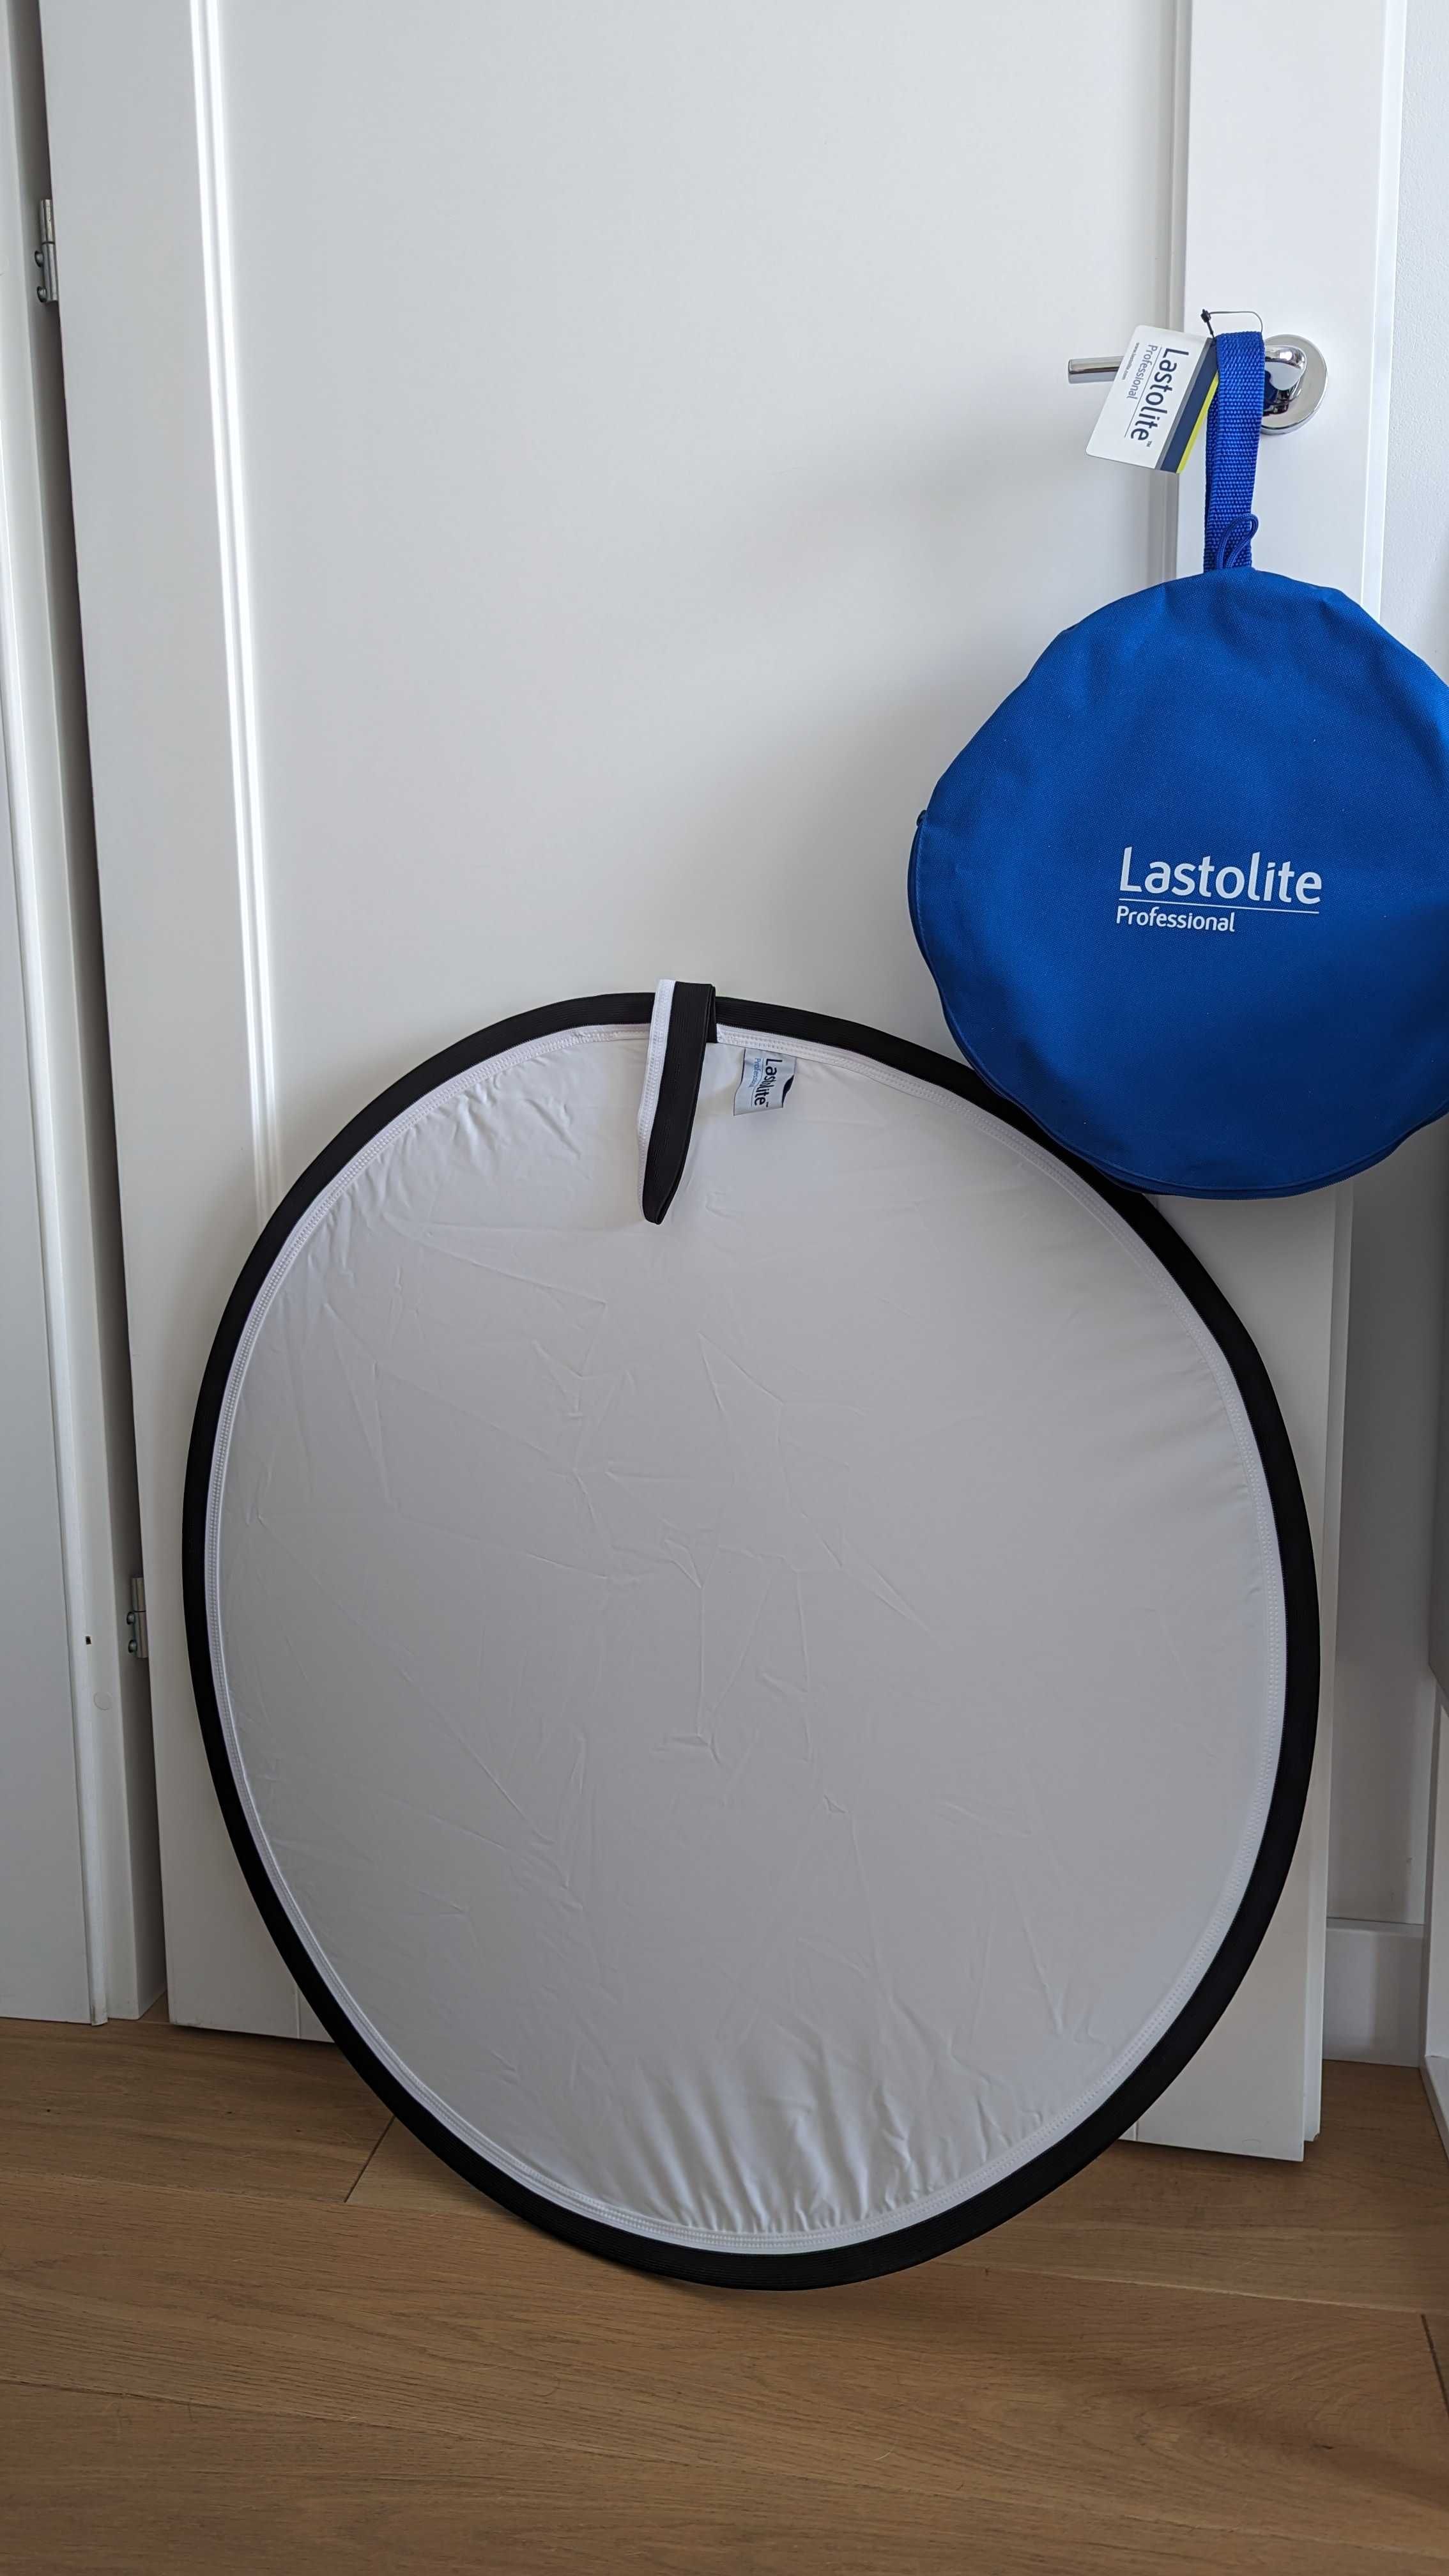 Listolite by Manfrotto White reflector / diffuser